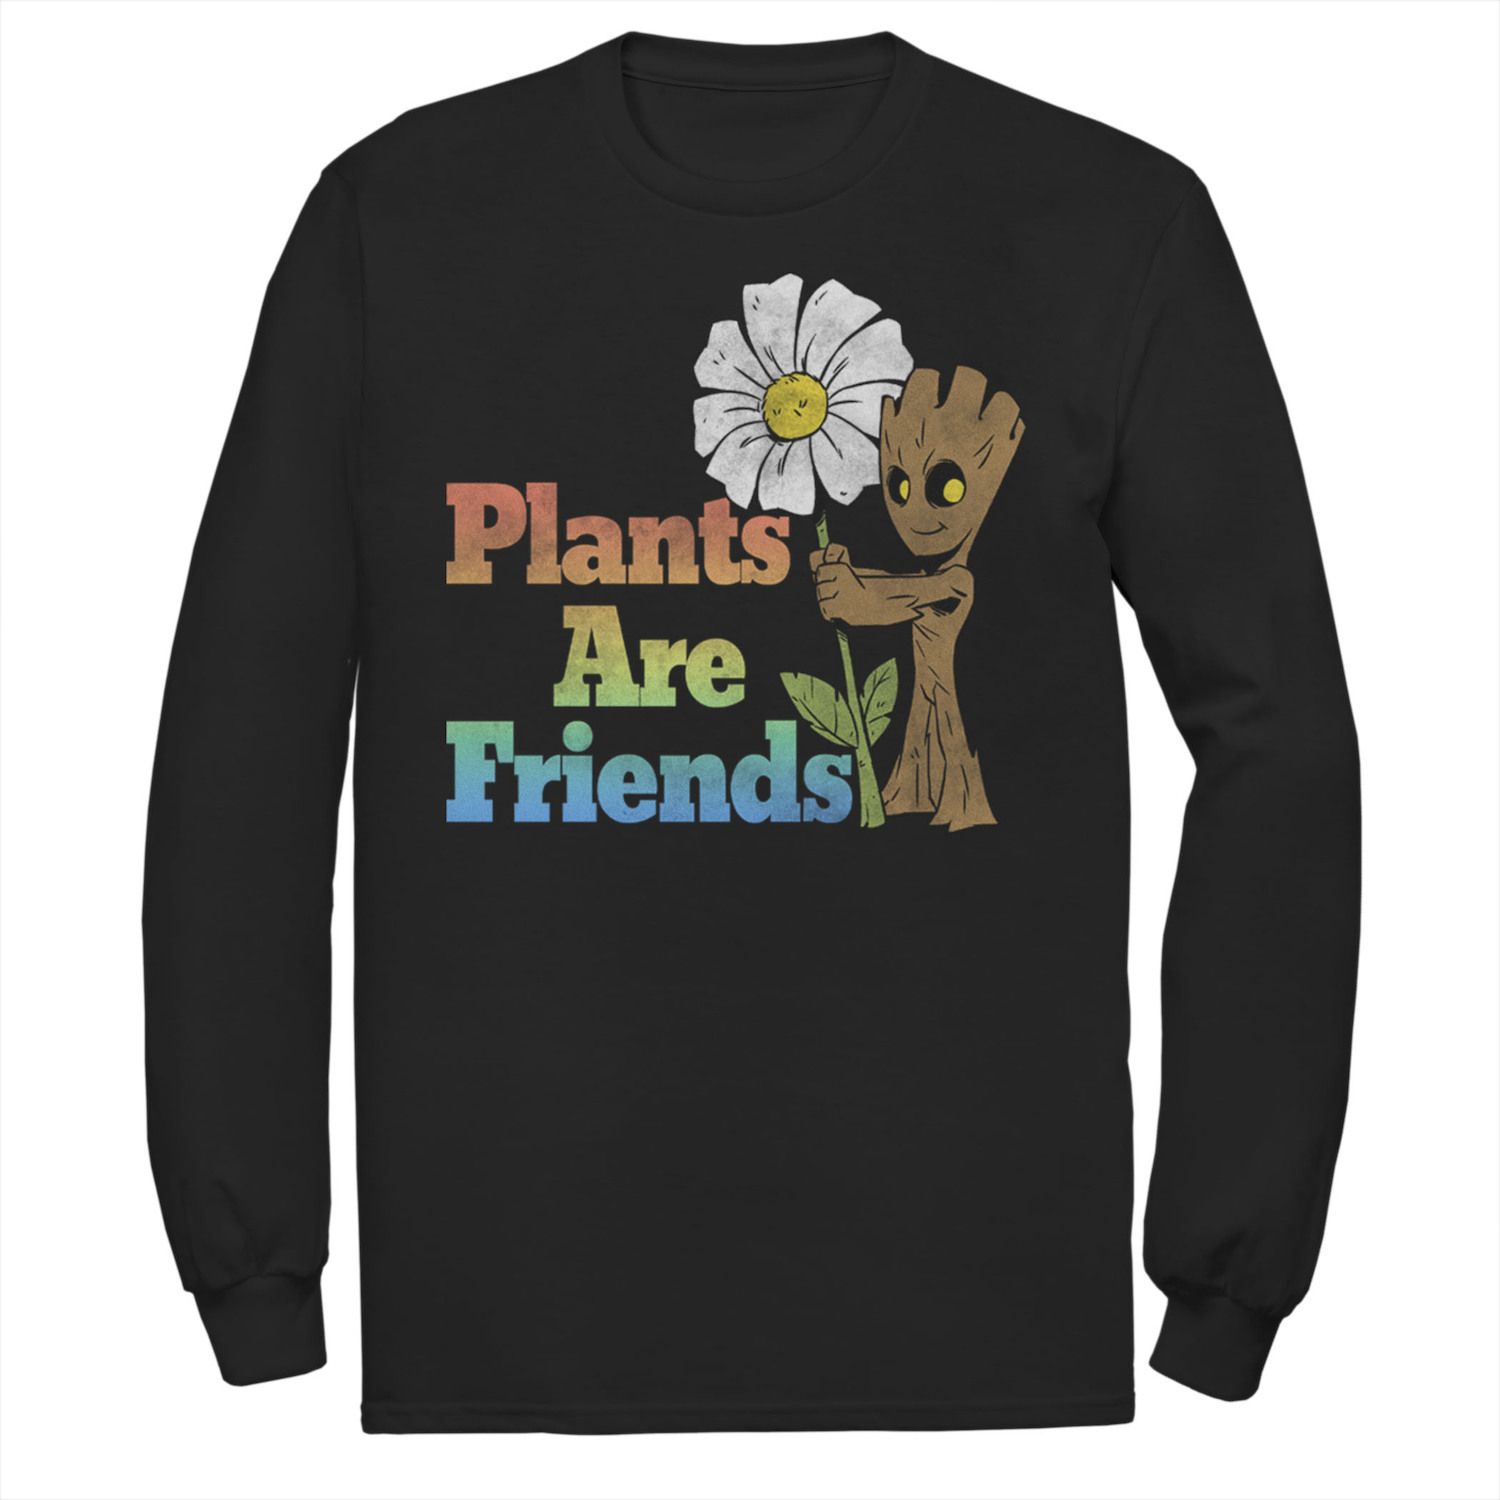 Мужская футболка с портретом Marvel GOTG Groot Plants Are Friends поло marvel gotg rocket racoon